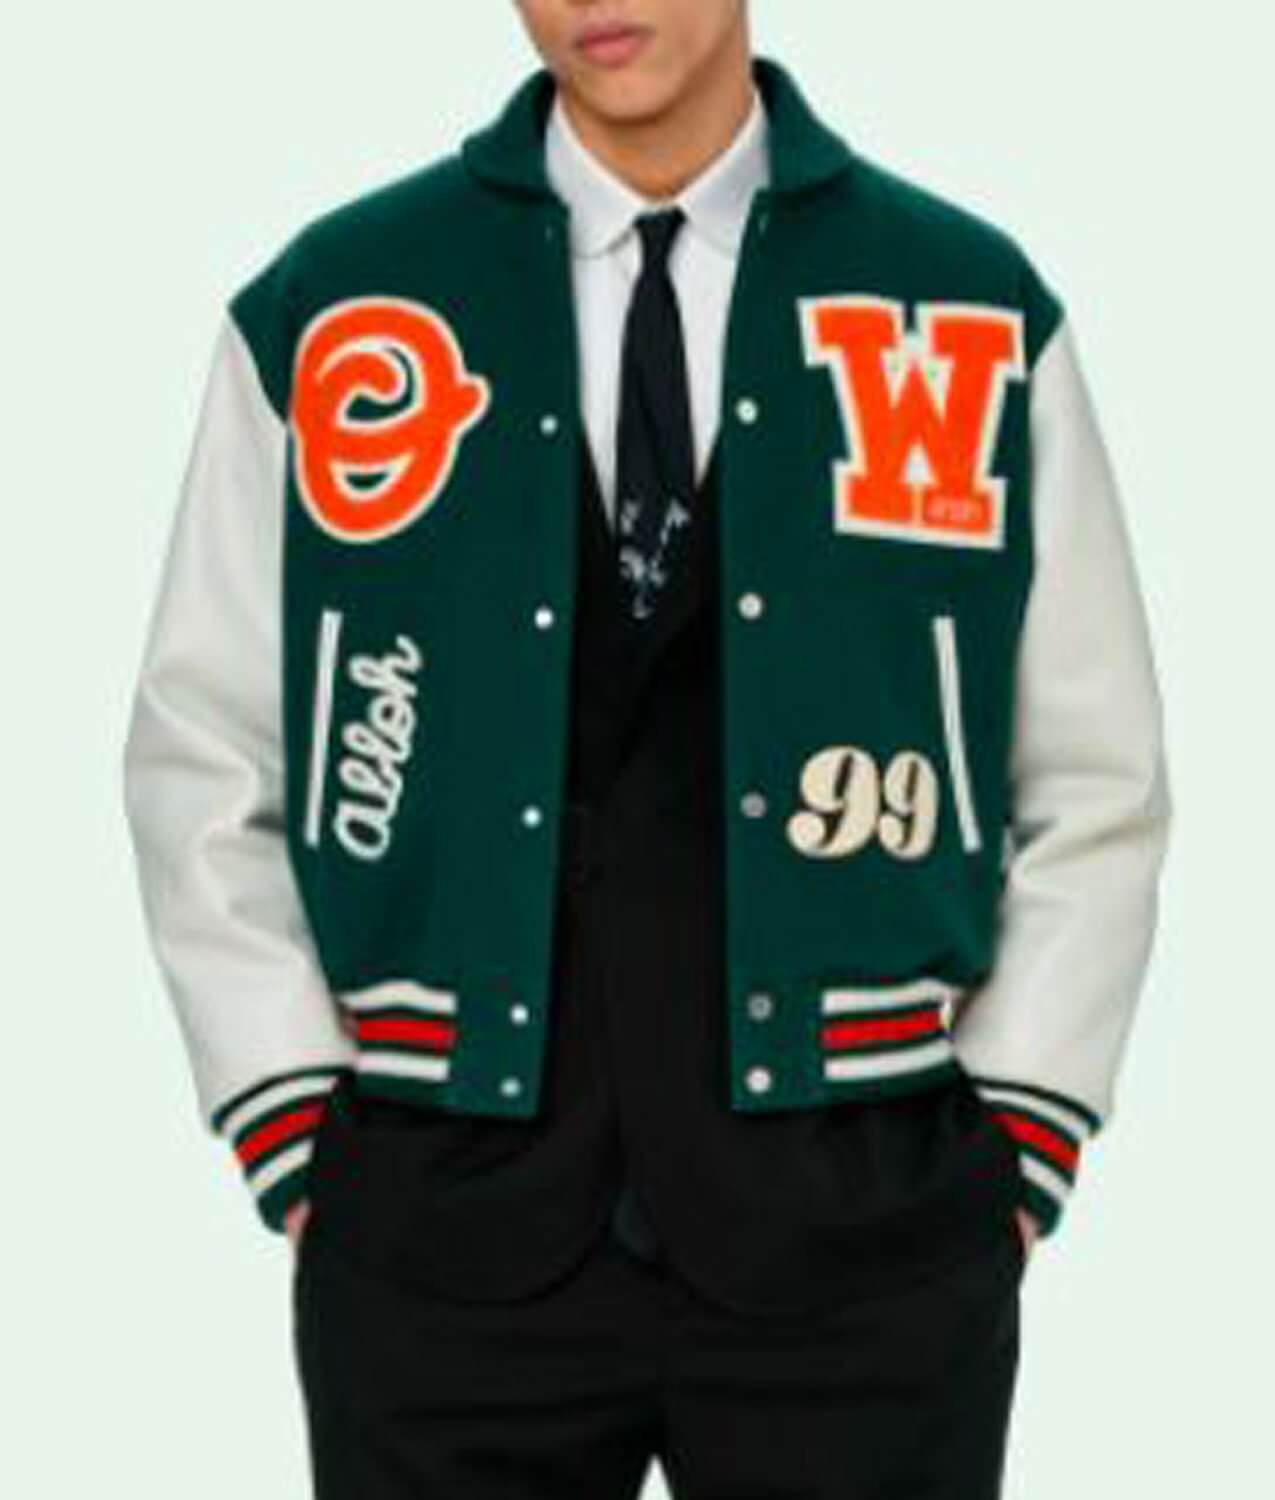 Maker of Jacket Varsity Jackets Green and White Letterman